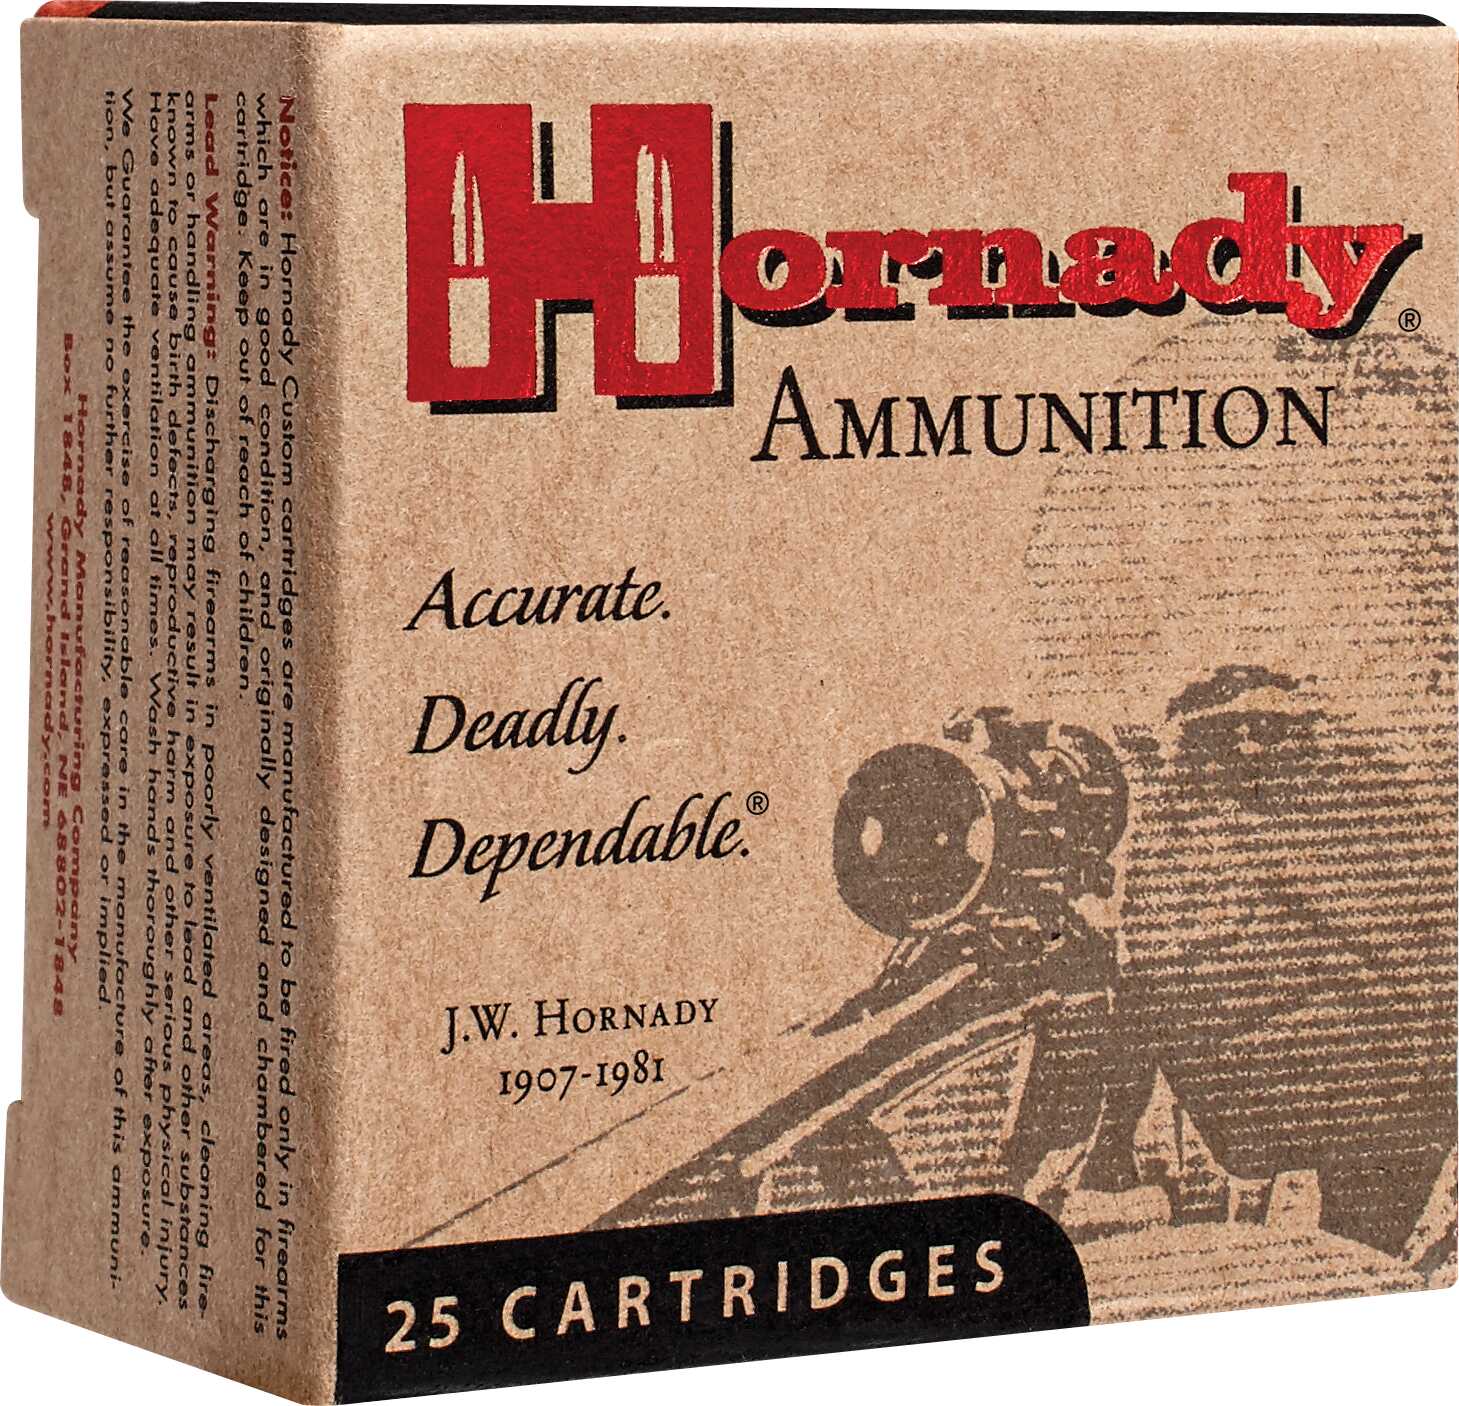 45 ACP 230 Grain Hollow Point 20 Rounds Hornady Ammunition